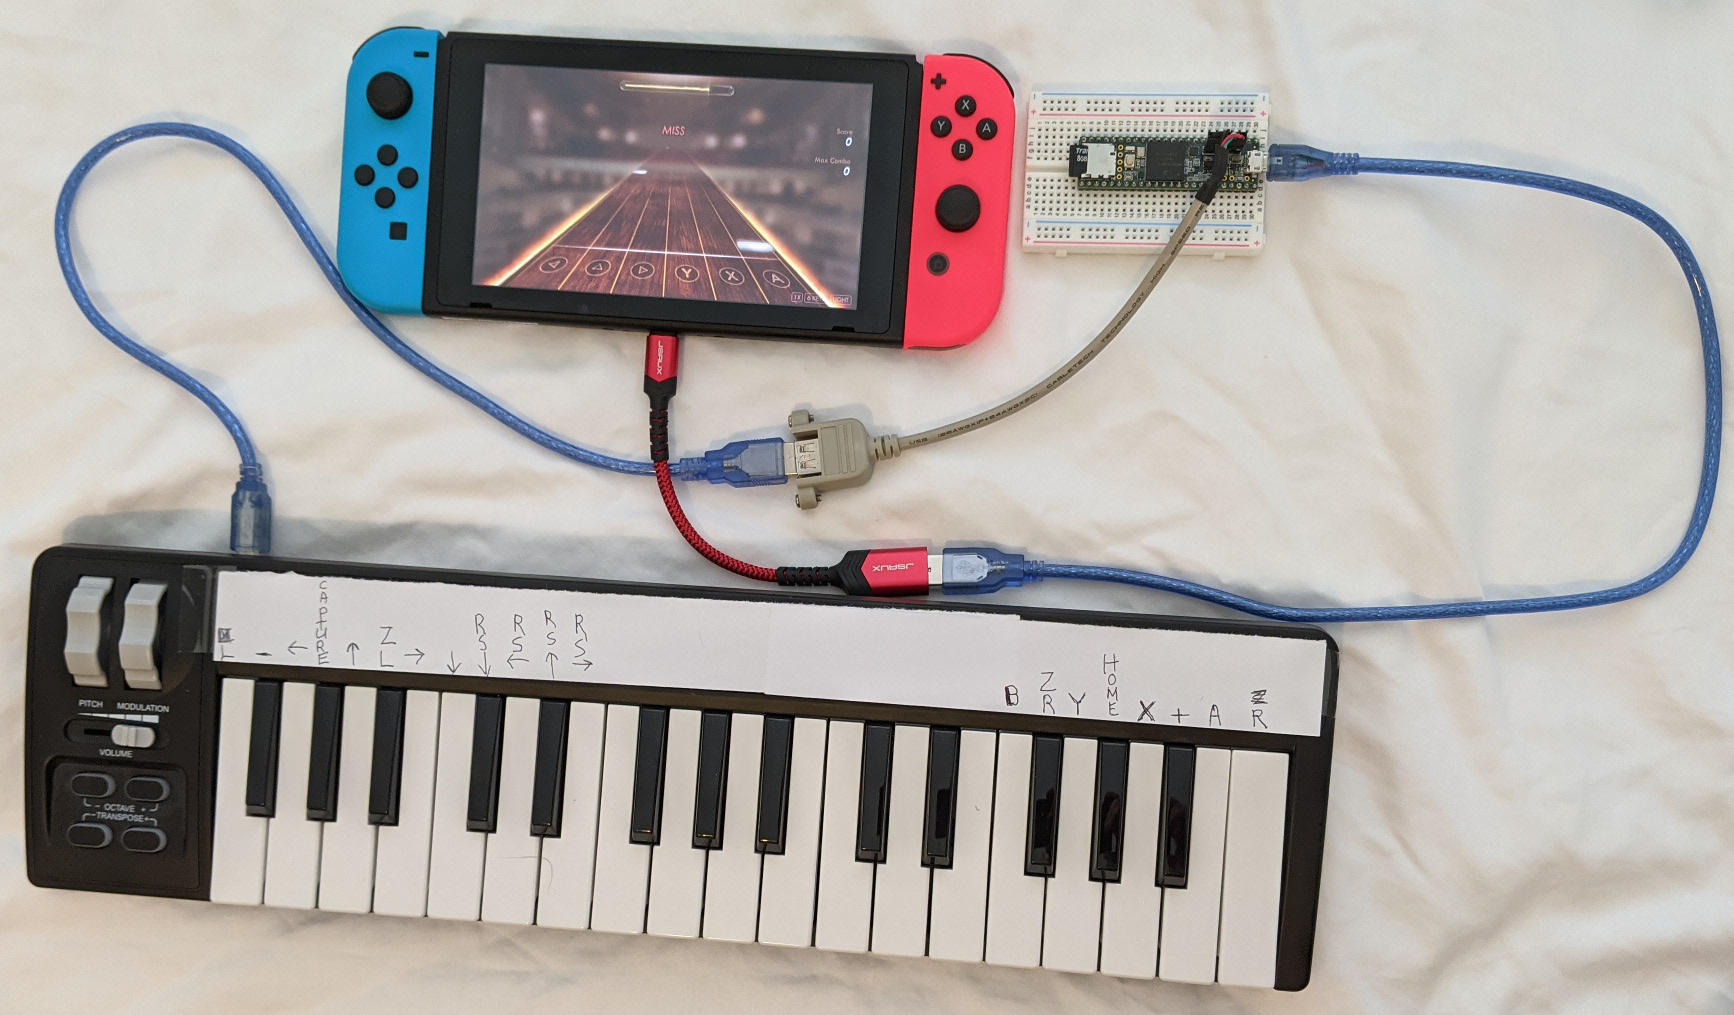 Nintendo Switch running Pianista with MIDI keyboard